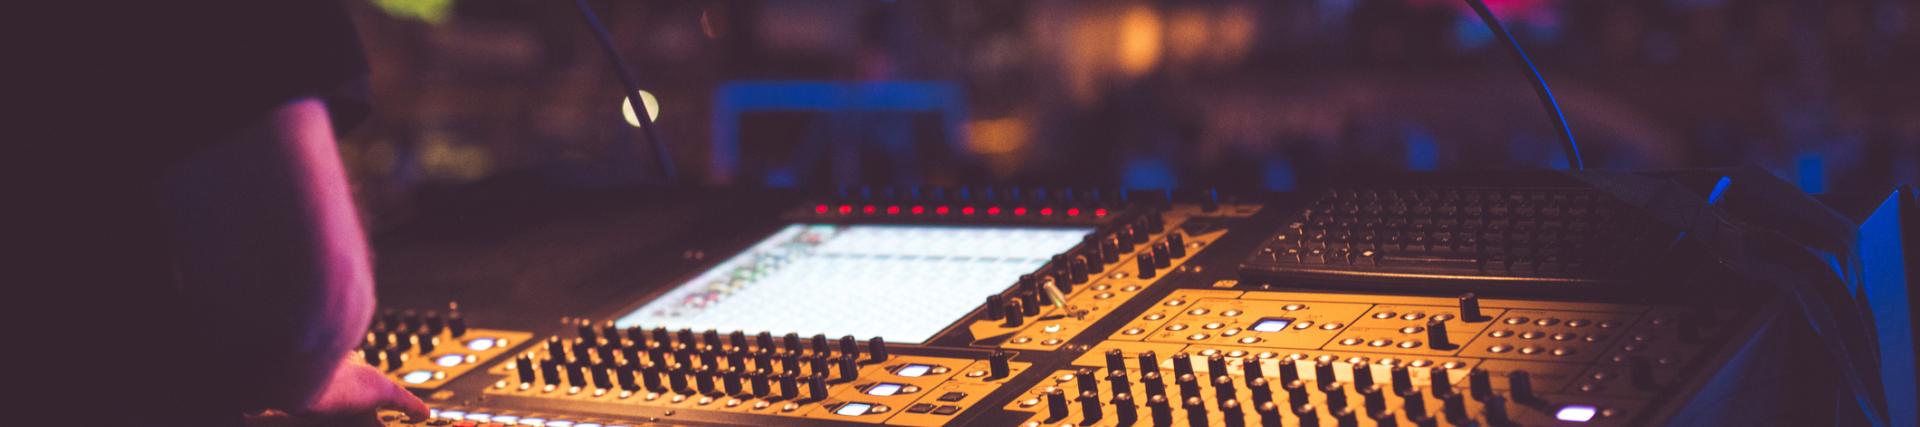 Illuminated mixing desk in a recording studio